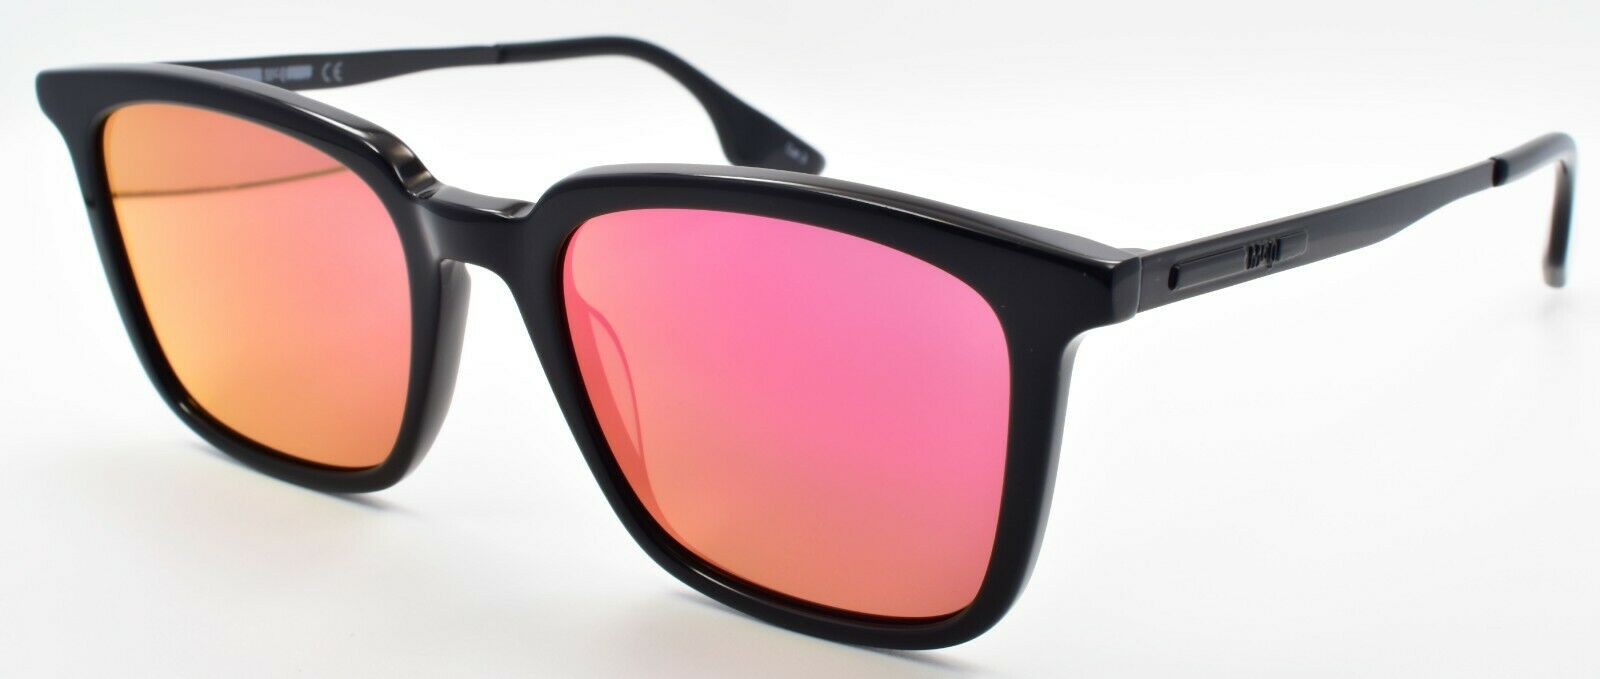 1-McQ Alexander McQueen MQ0070S 006 Unisex Sunglasses Black / Mirrored-889652064857-IKSpecs